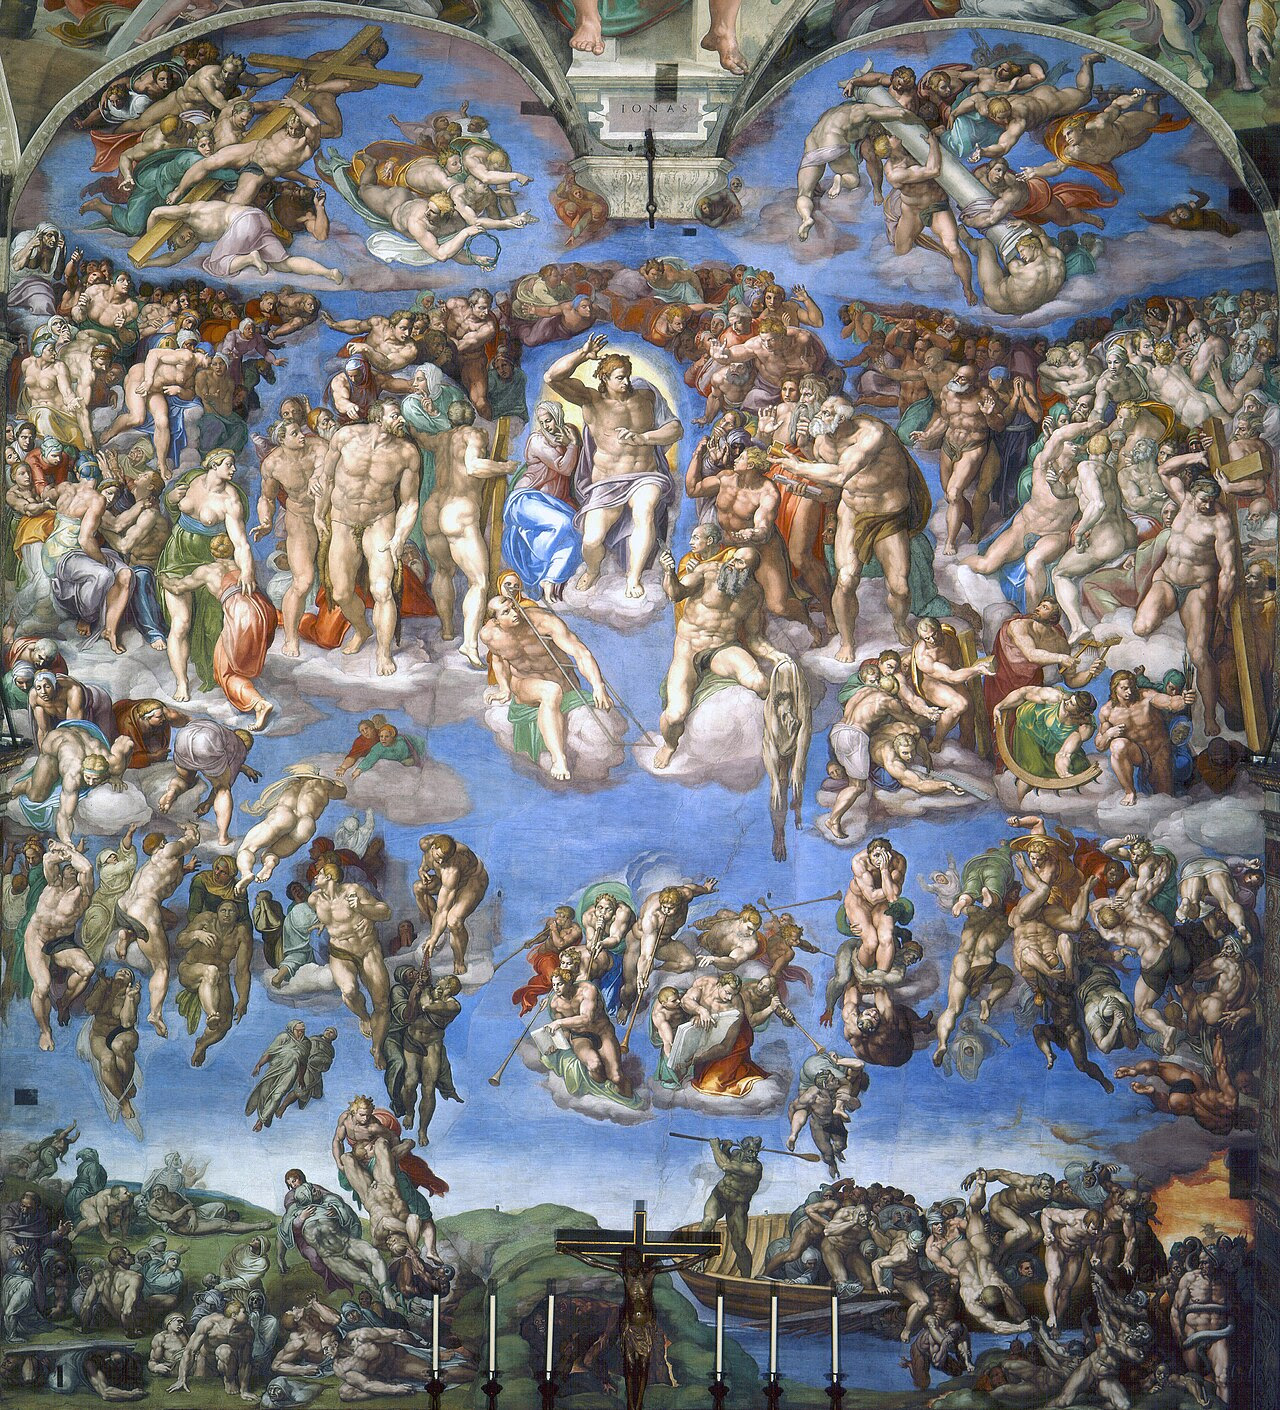 This Has Been Hidden in Michelangelo’s ‘The Final Judgment’ For Centuries - Shocking (Videos)